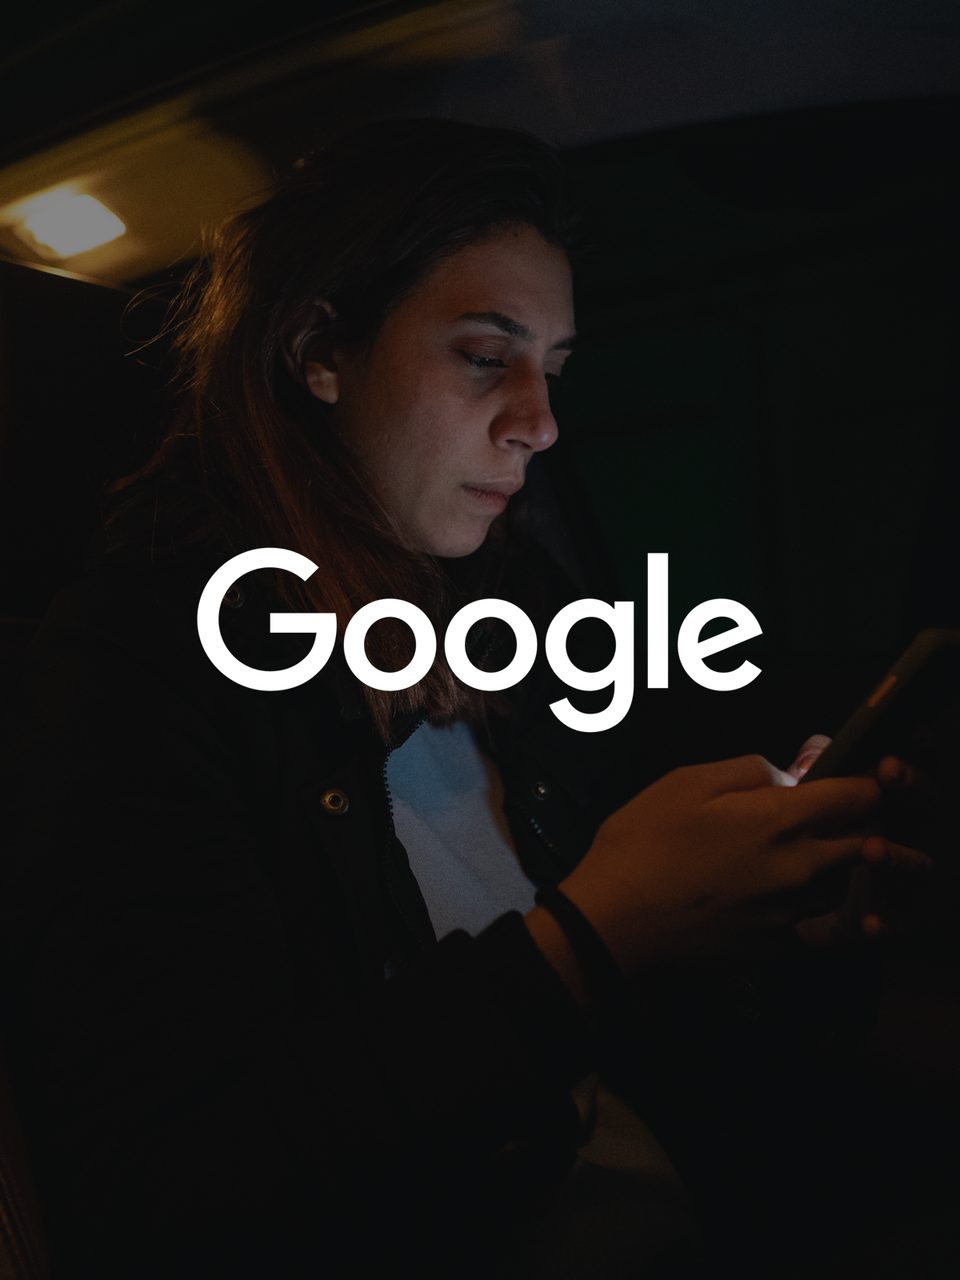 Woman on phone with google logo overlaid